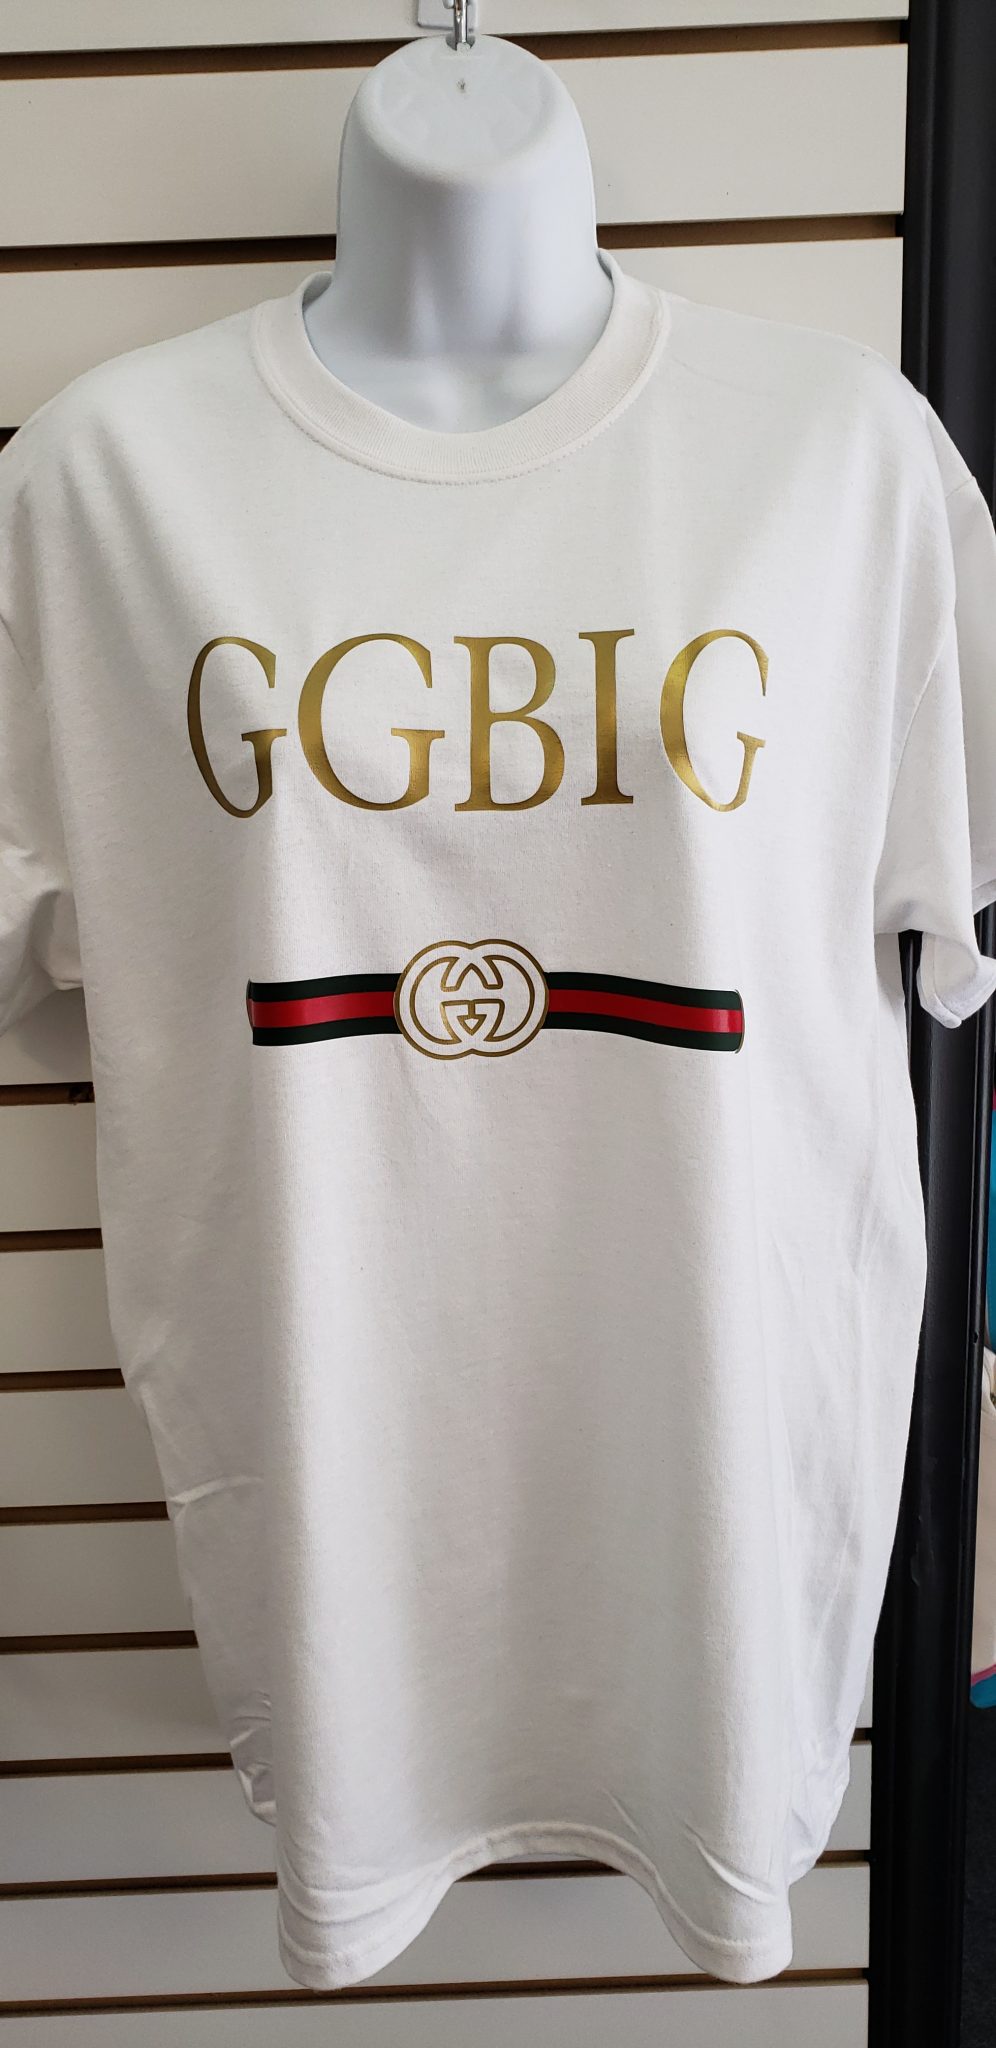 gucci inspired shirt